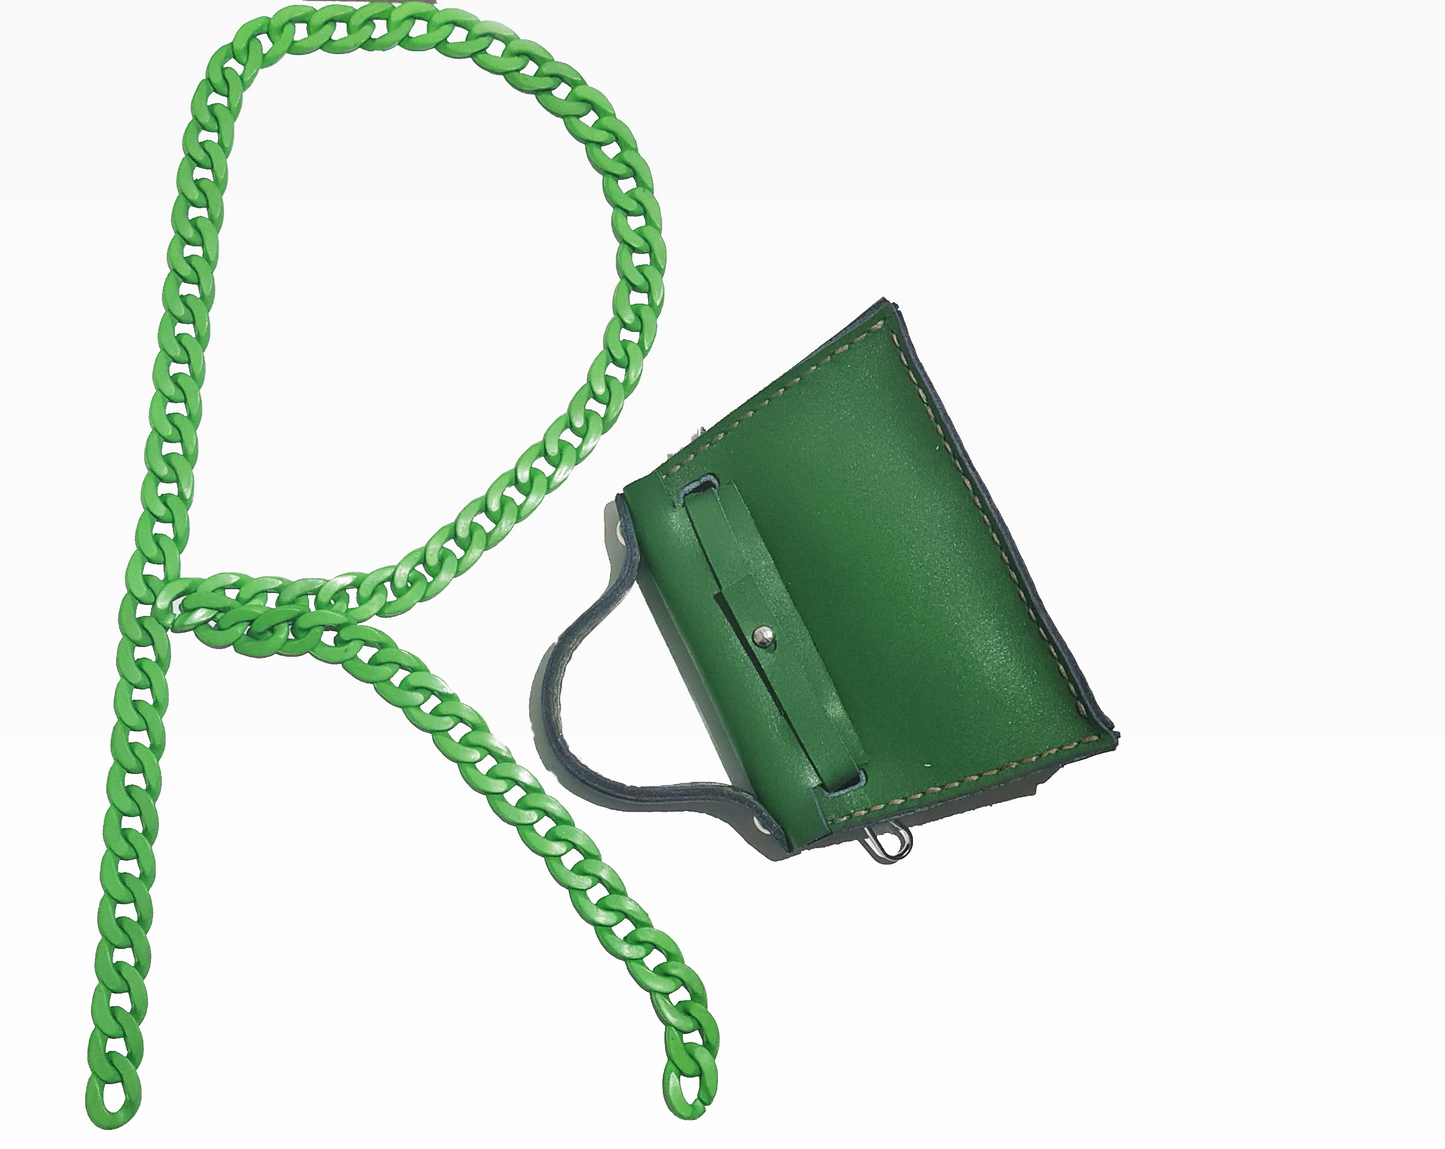 Mini green bag with a plastic chain